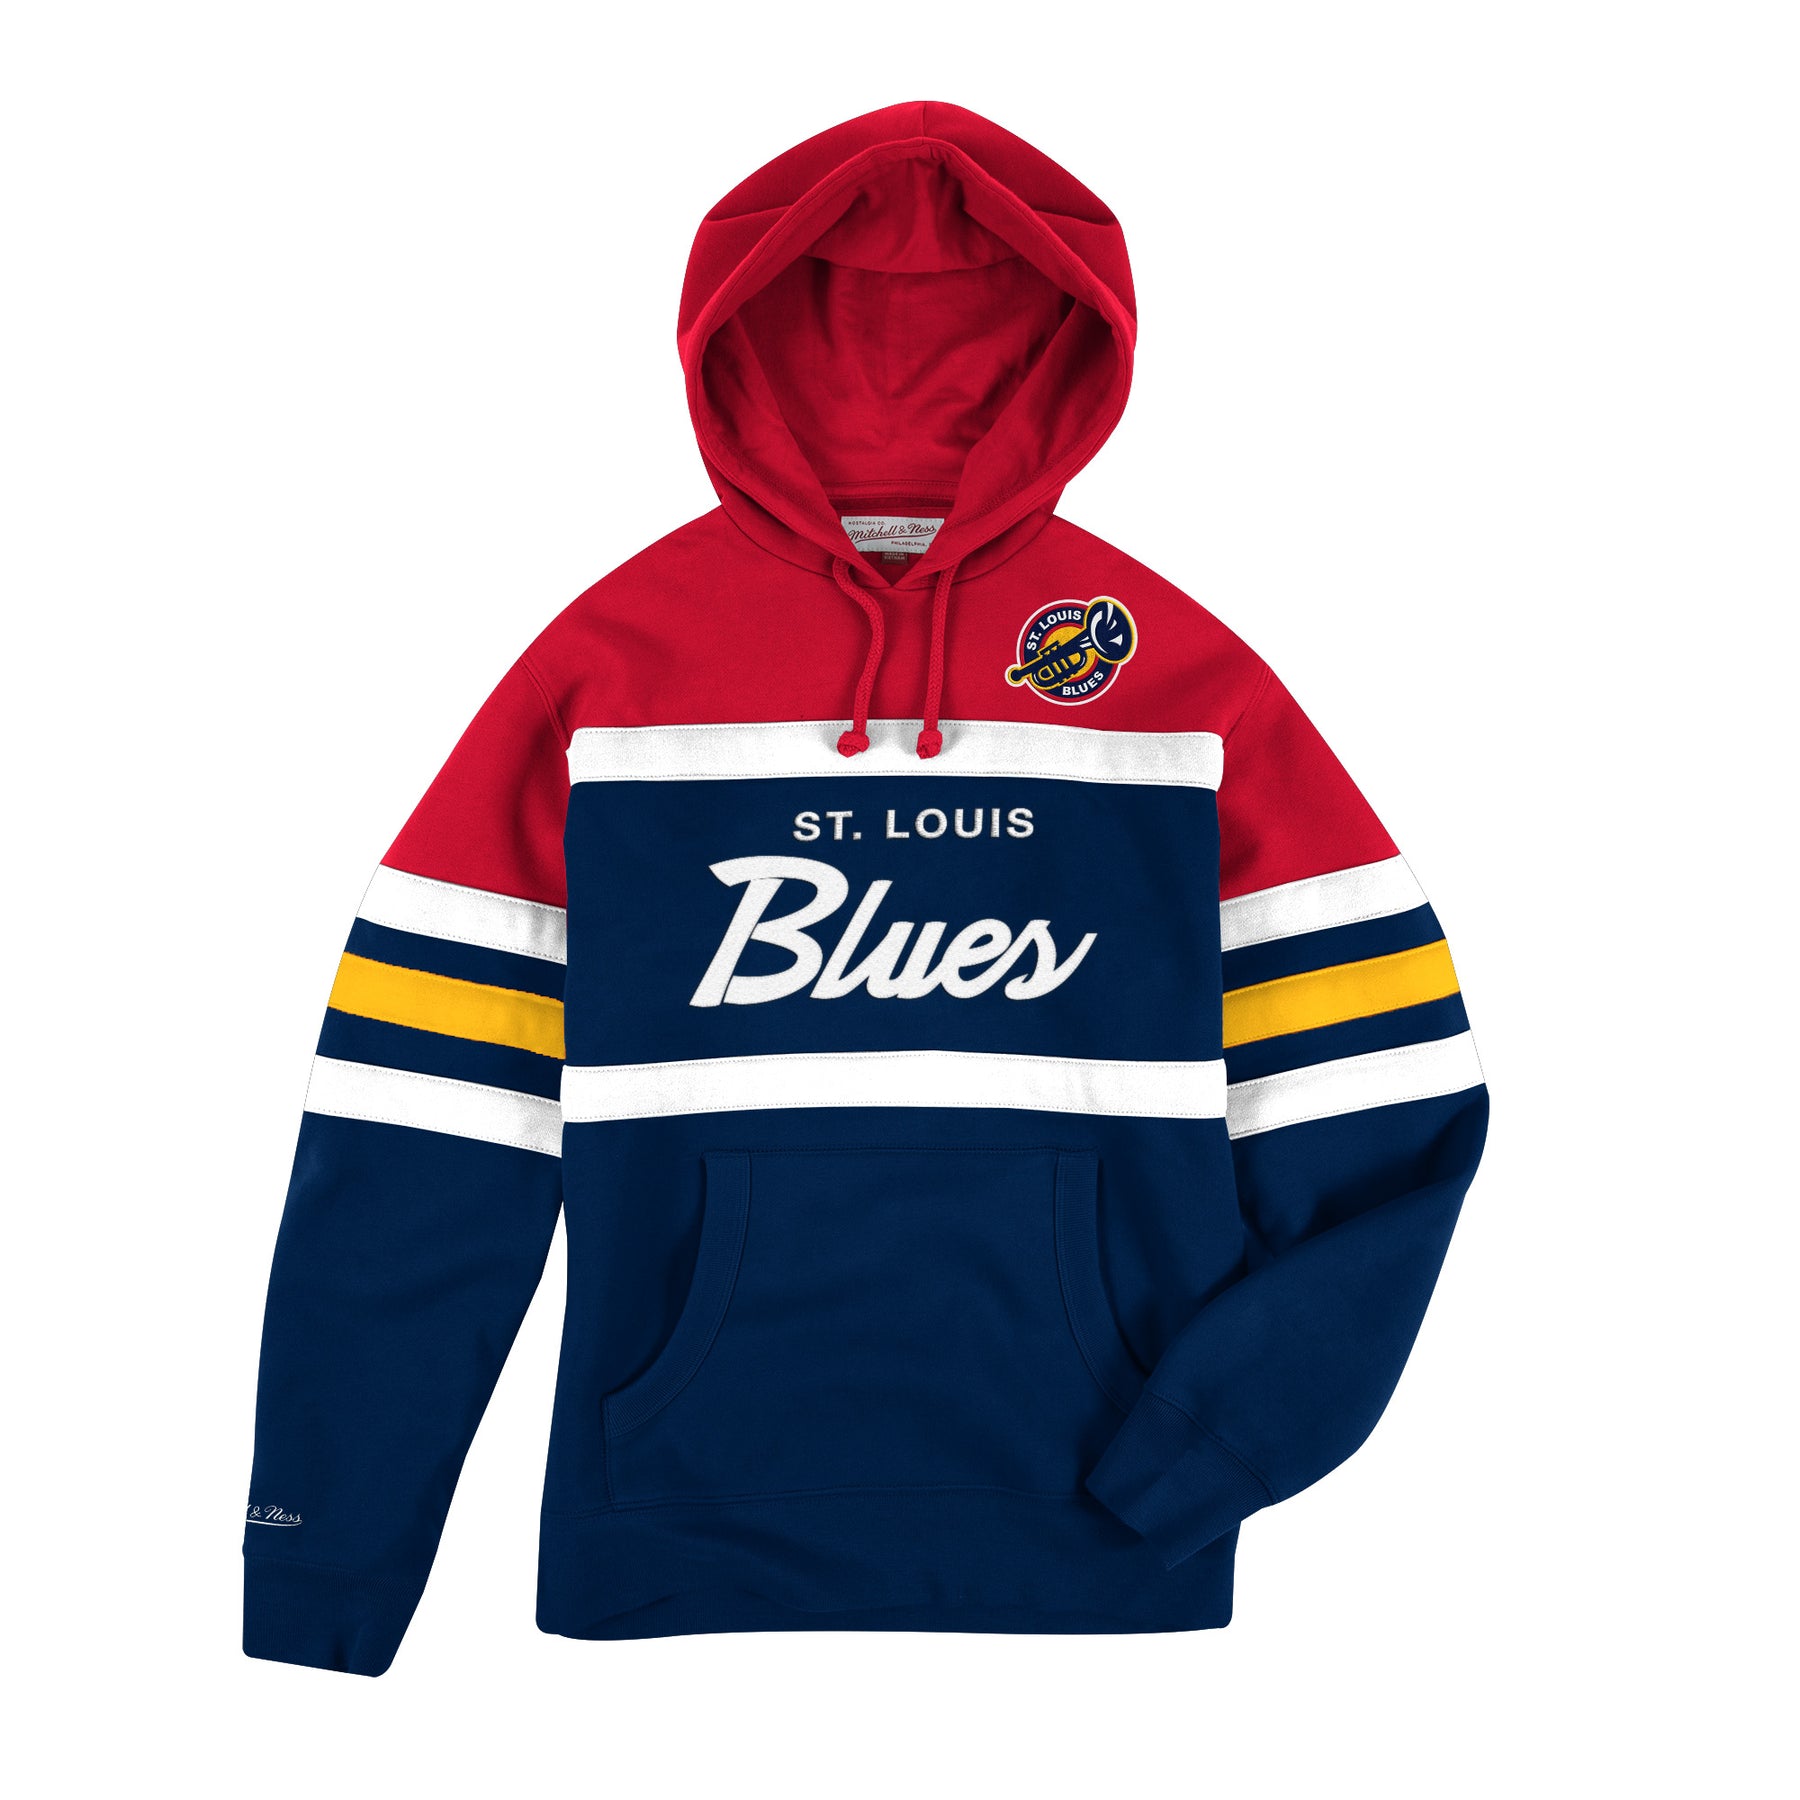 Hooded sweatshirt with Saint Louis blues logo